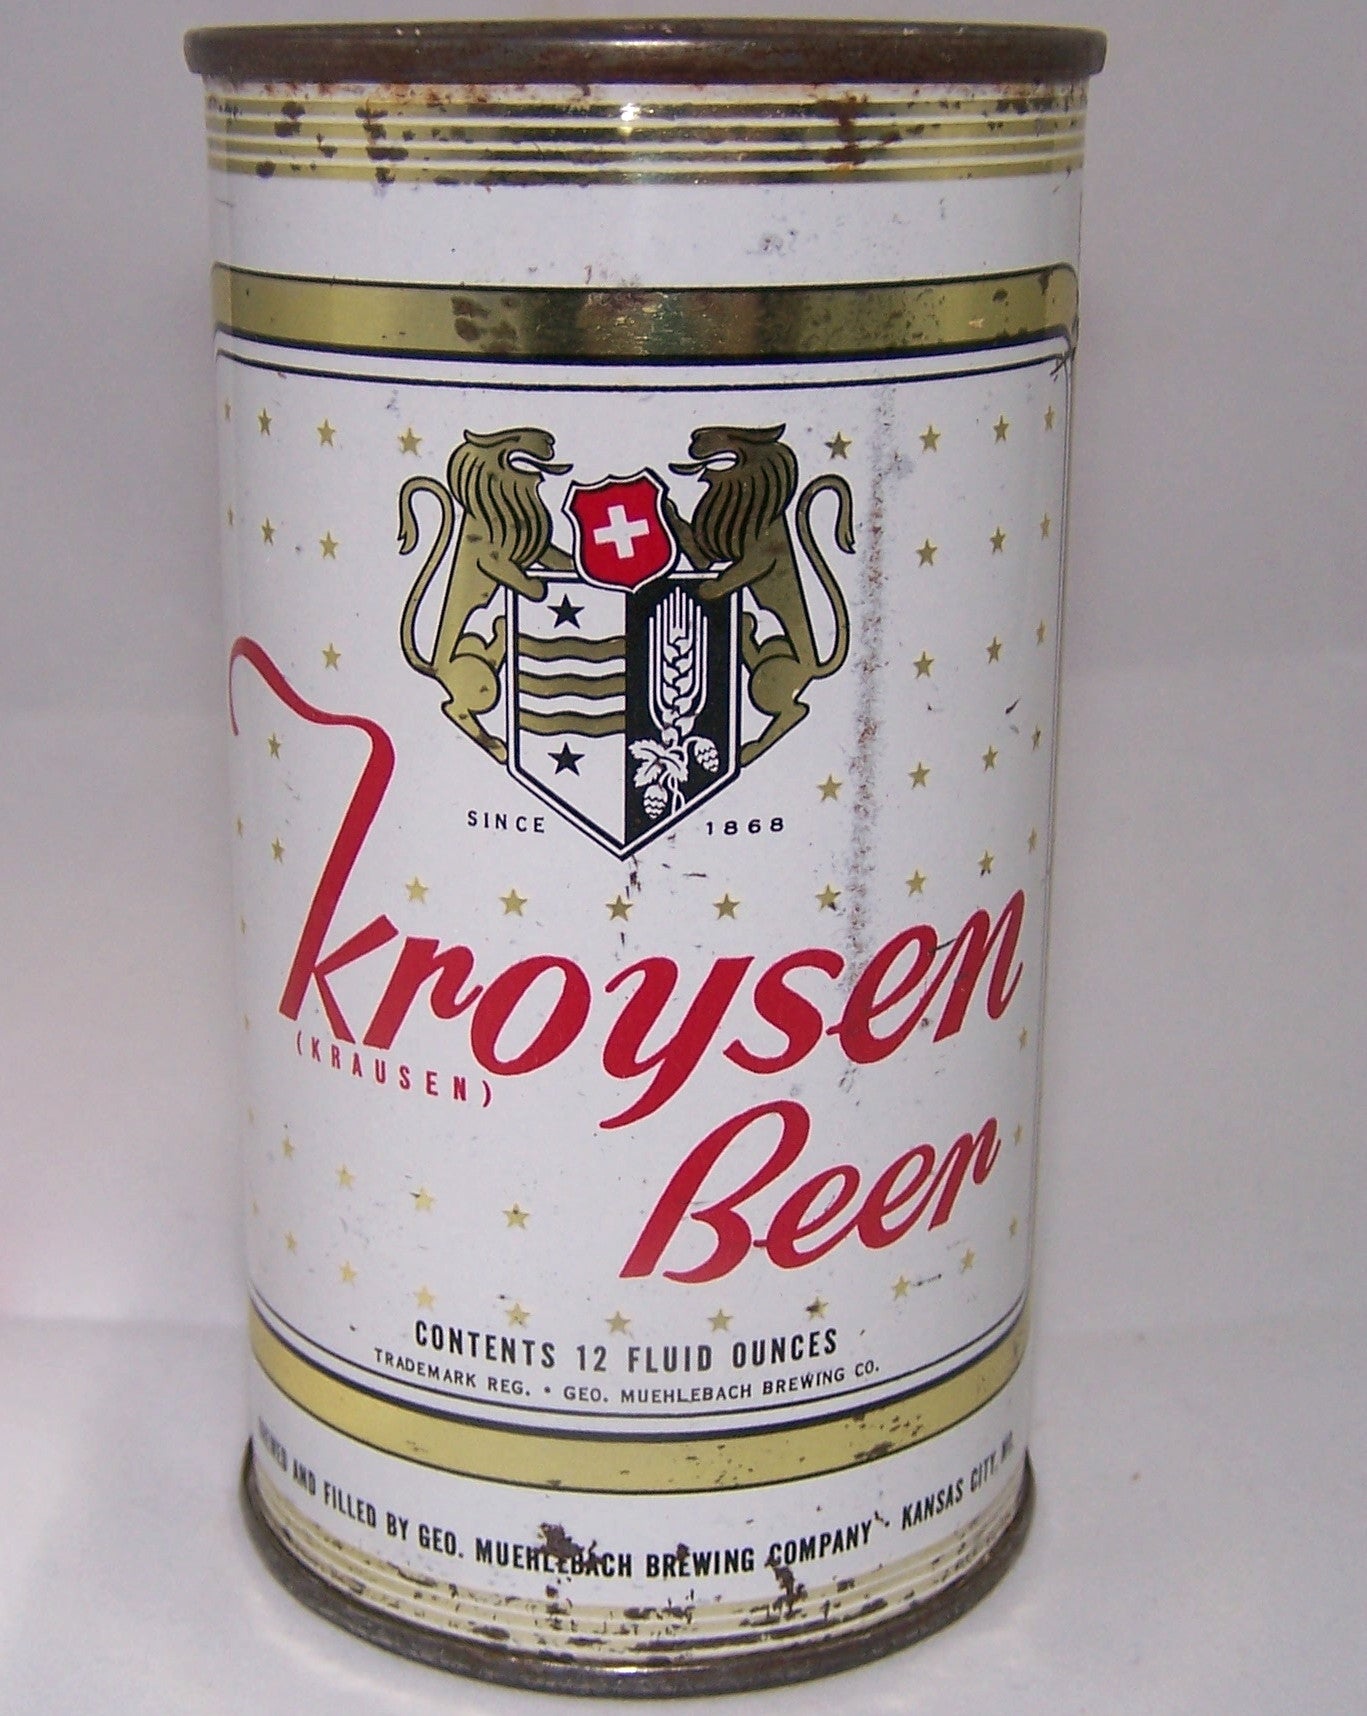 Kroysen Beer USBC 89-20, Grade 1- Sold on 3/22/15